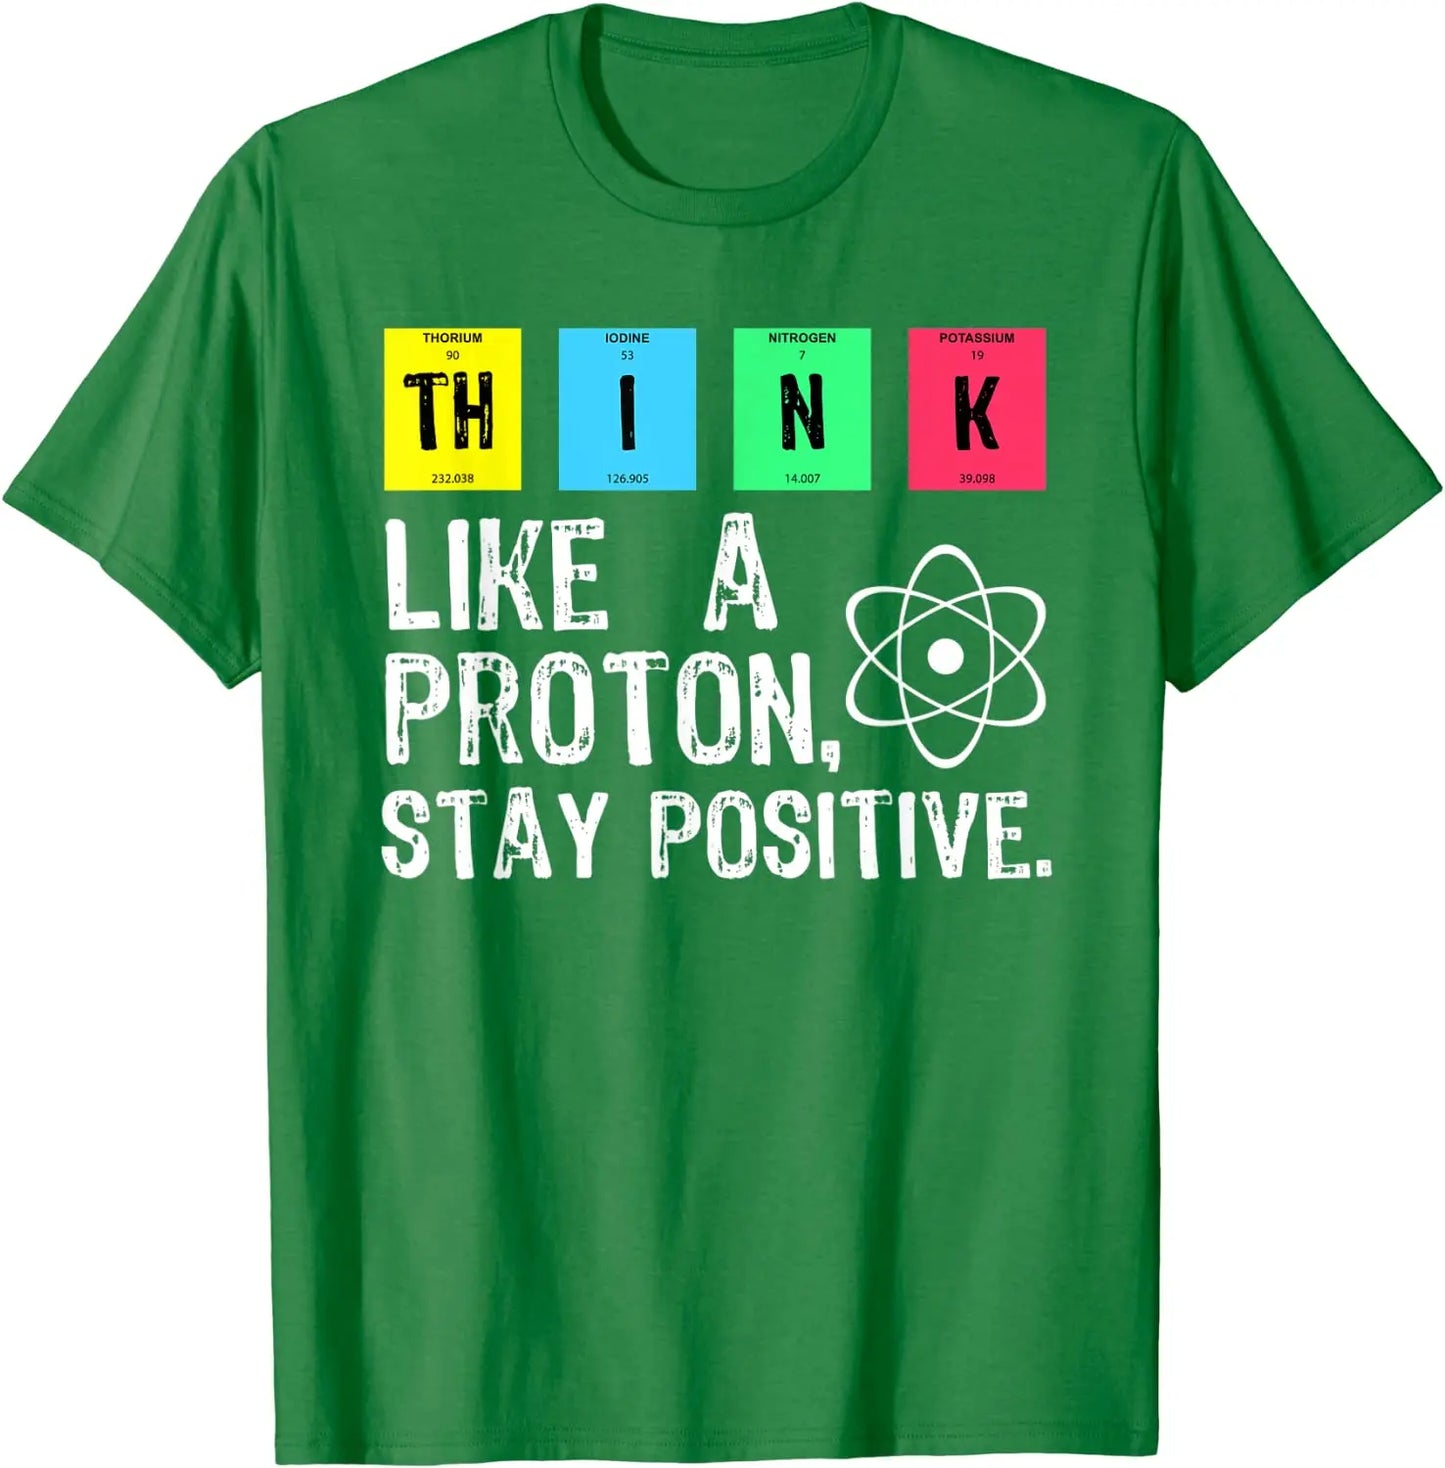 T-Shirt - Science - Atom - Proton Shirt